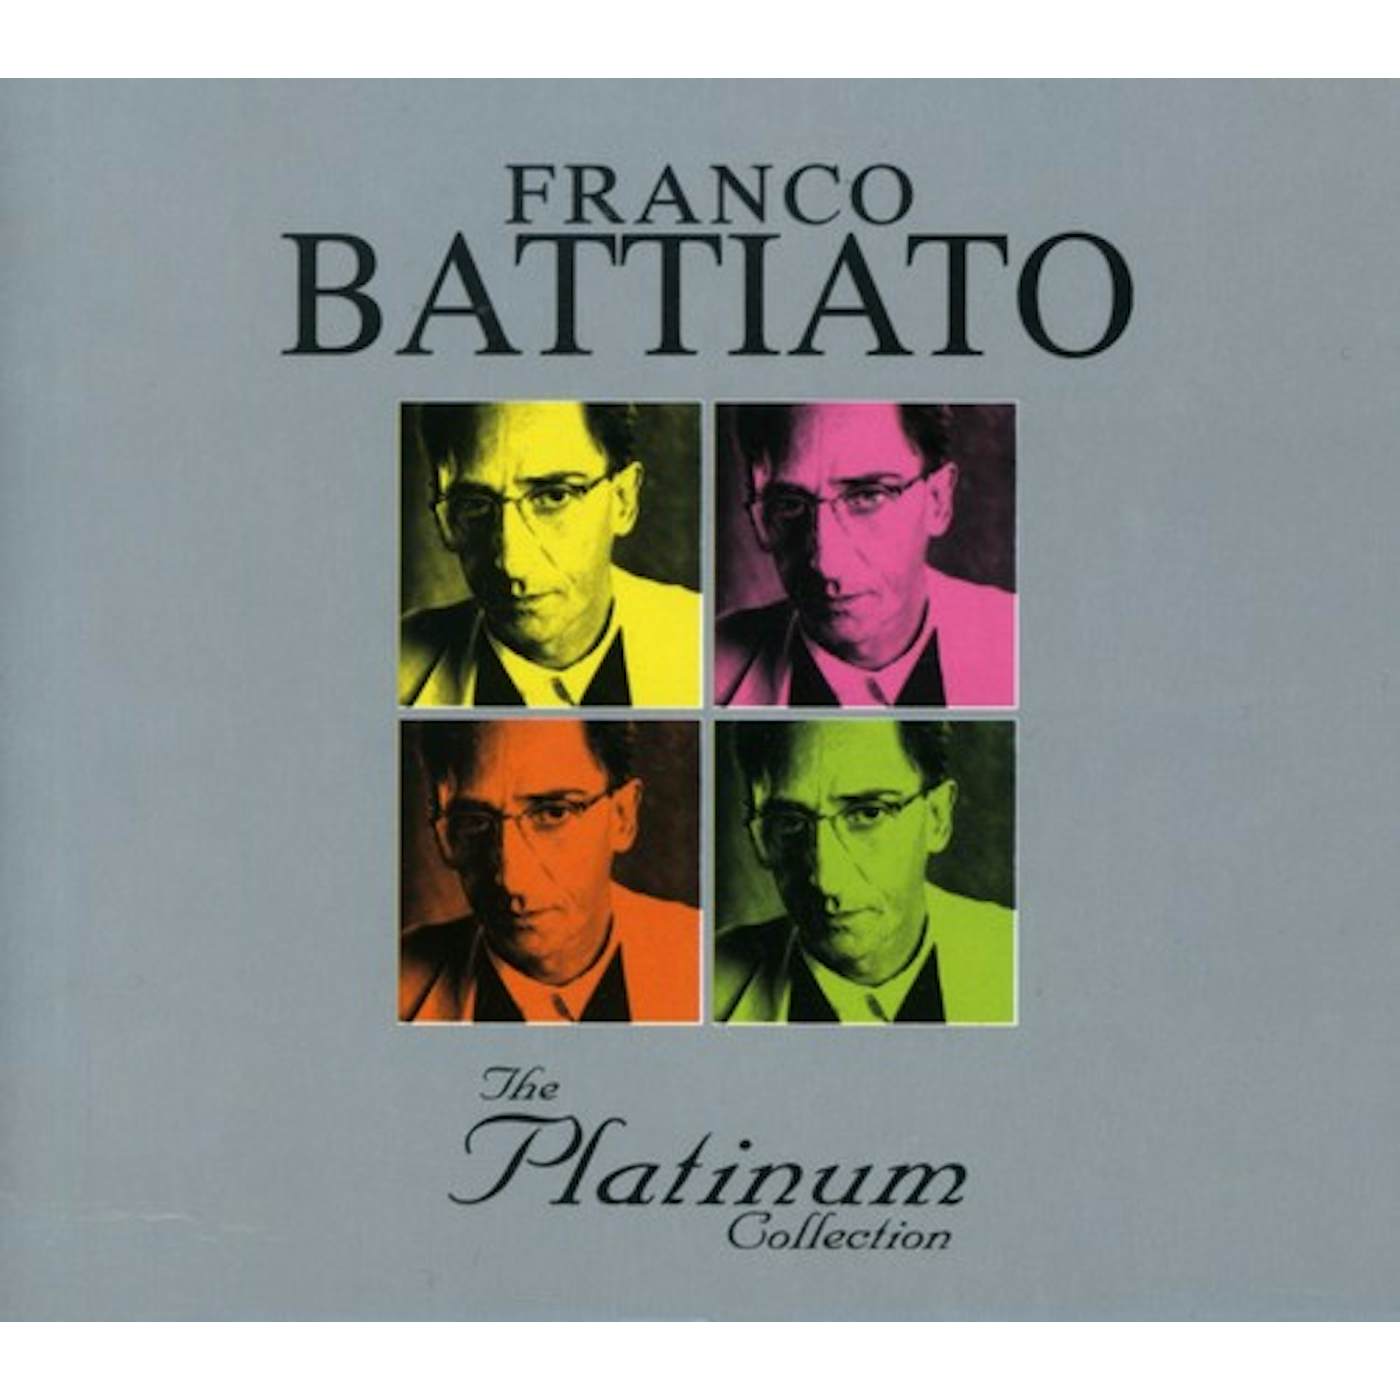 Franco Battiato PLATINUM COLLECTION CD